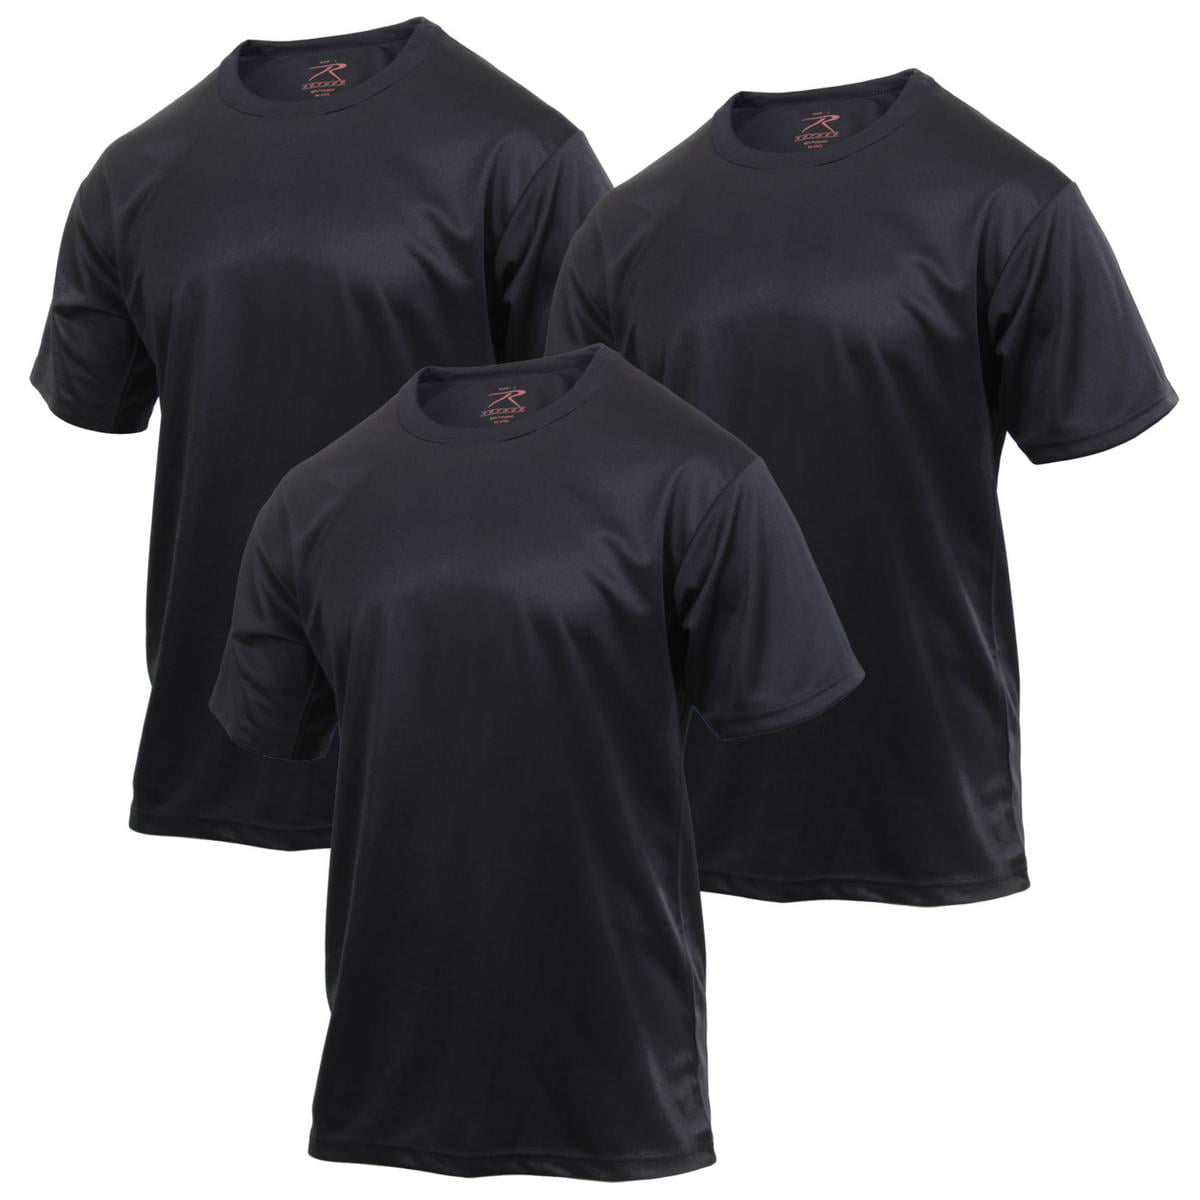 Rothco 3-Pack Quick Dry Moisture Wicking T-Shirt, Black - Walmart.com